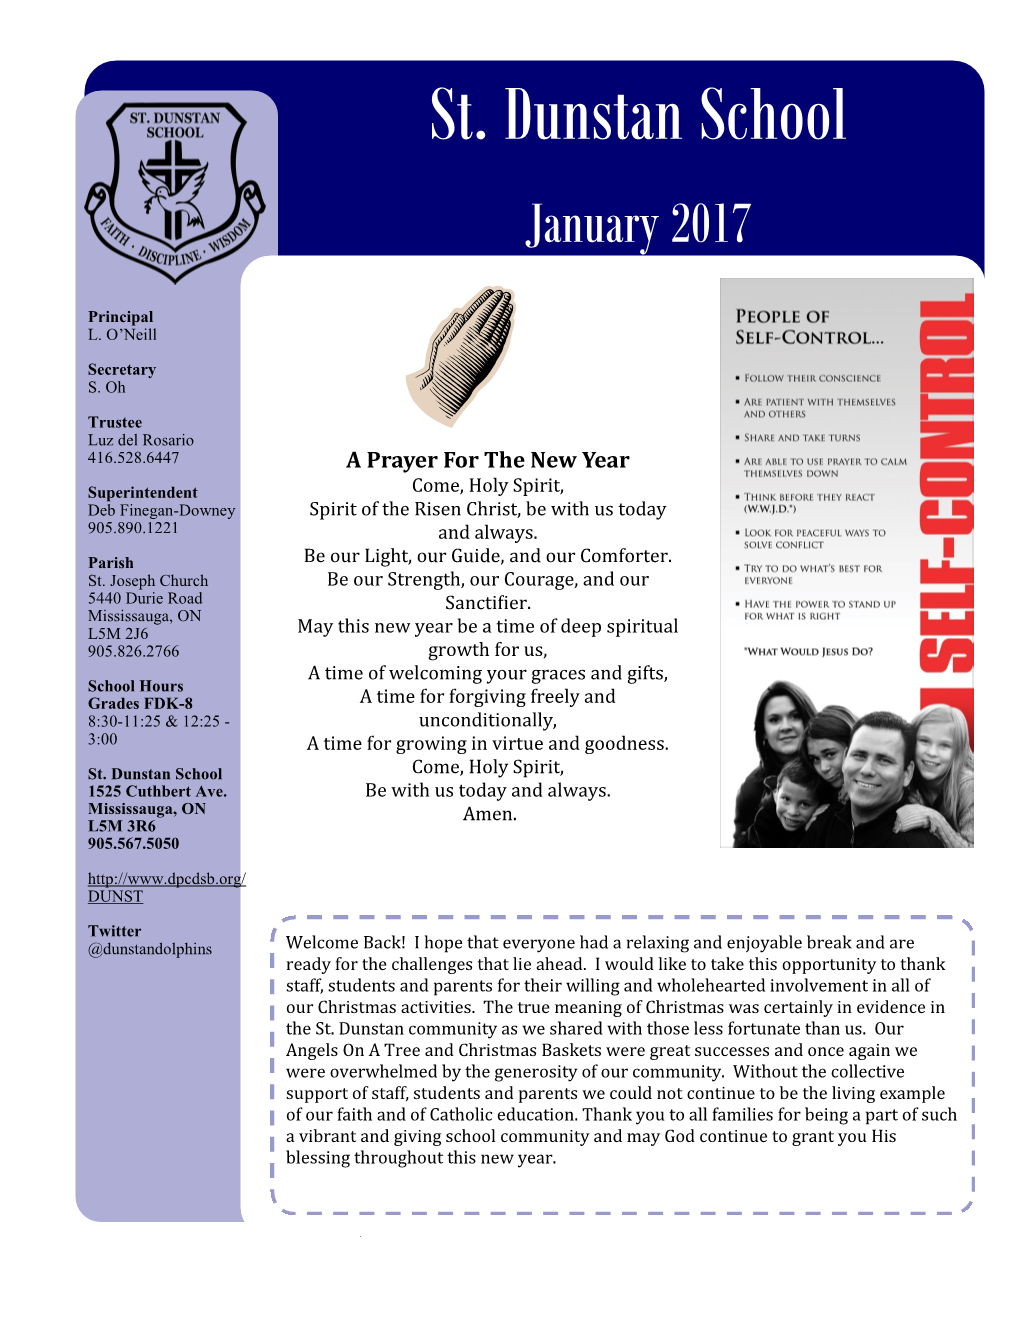 St. Dunstan School January 2017